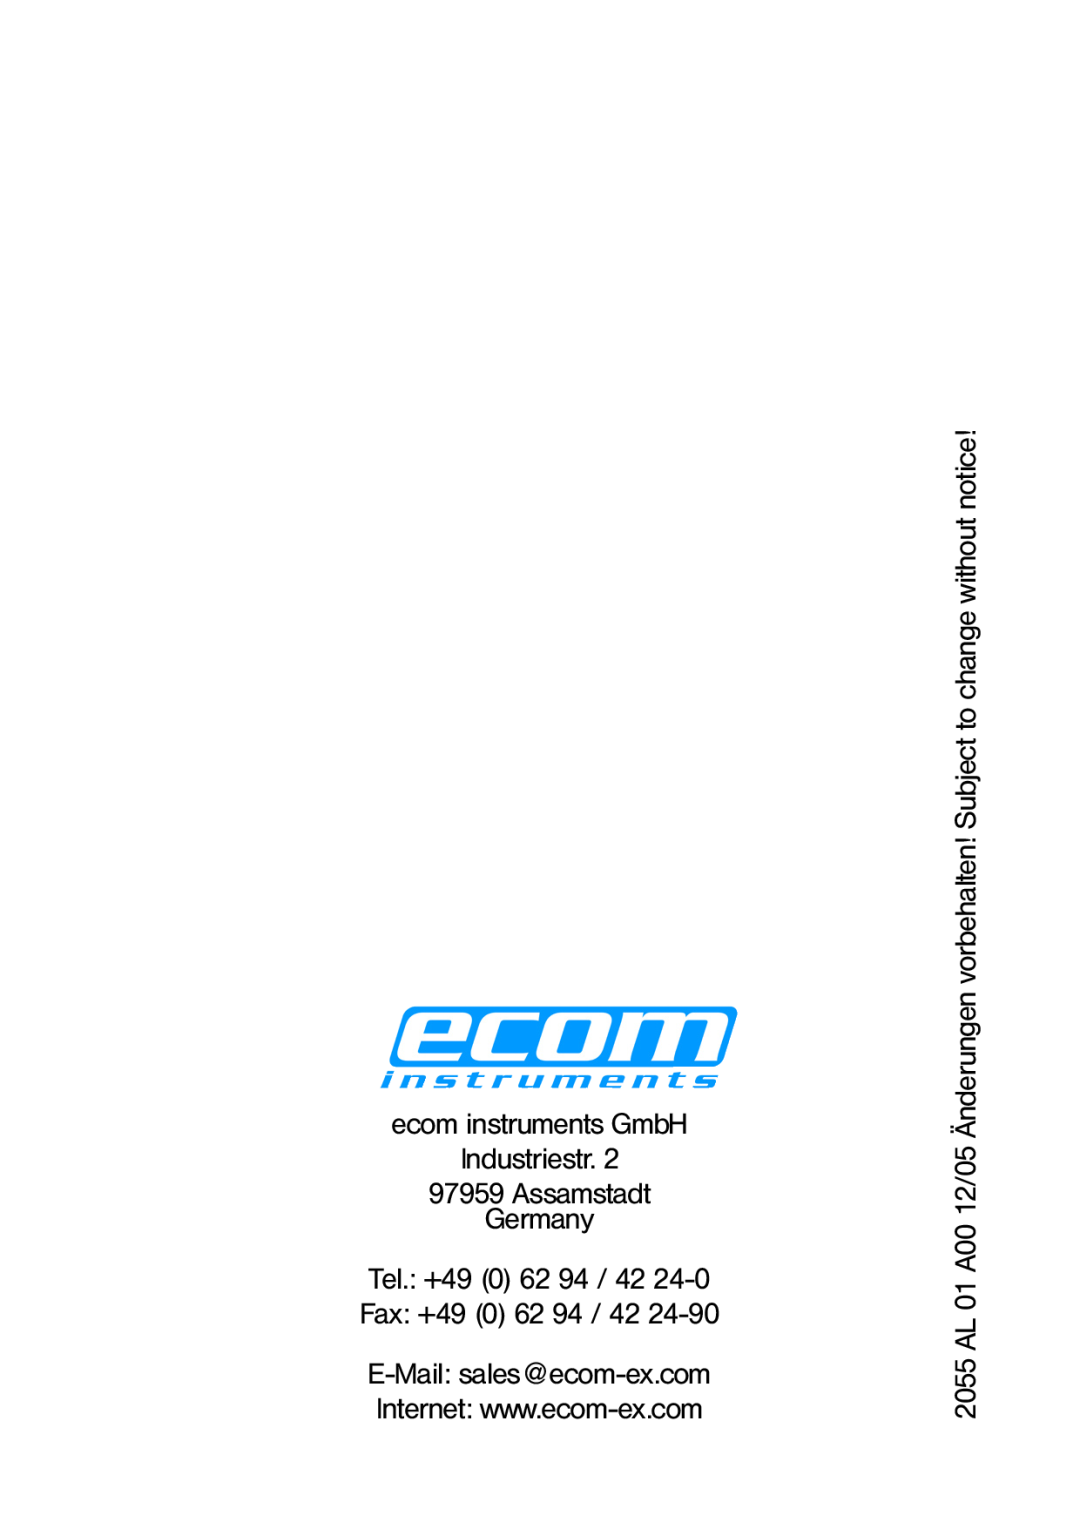 Ecom Instruments Lite-Ex PL 30 ecom instruments GmbH Industriestr, Assamstadt Germany, Tel. +49 0 62 94 / 42 24-0Fax +49 0 